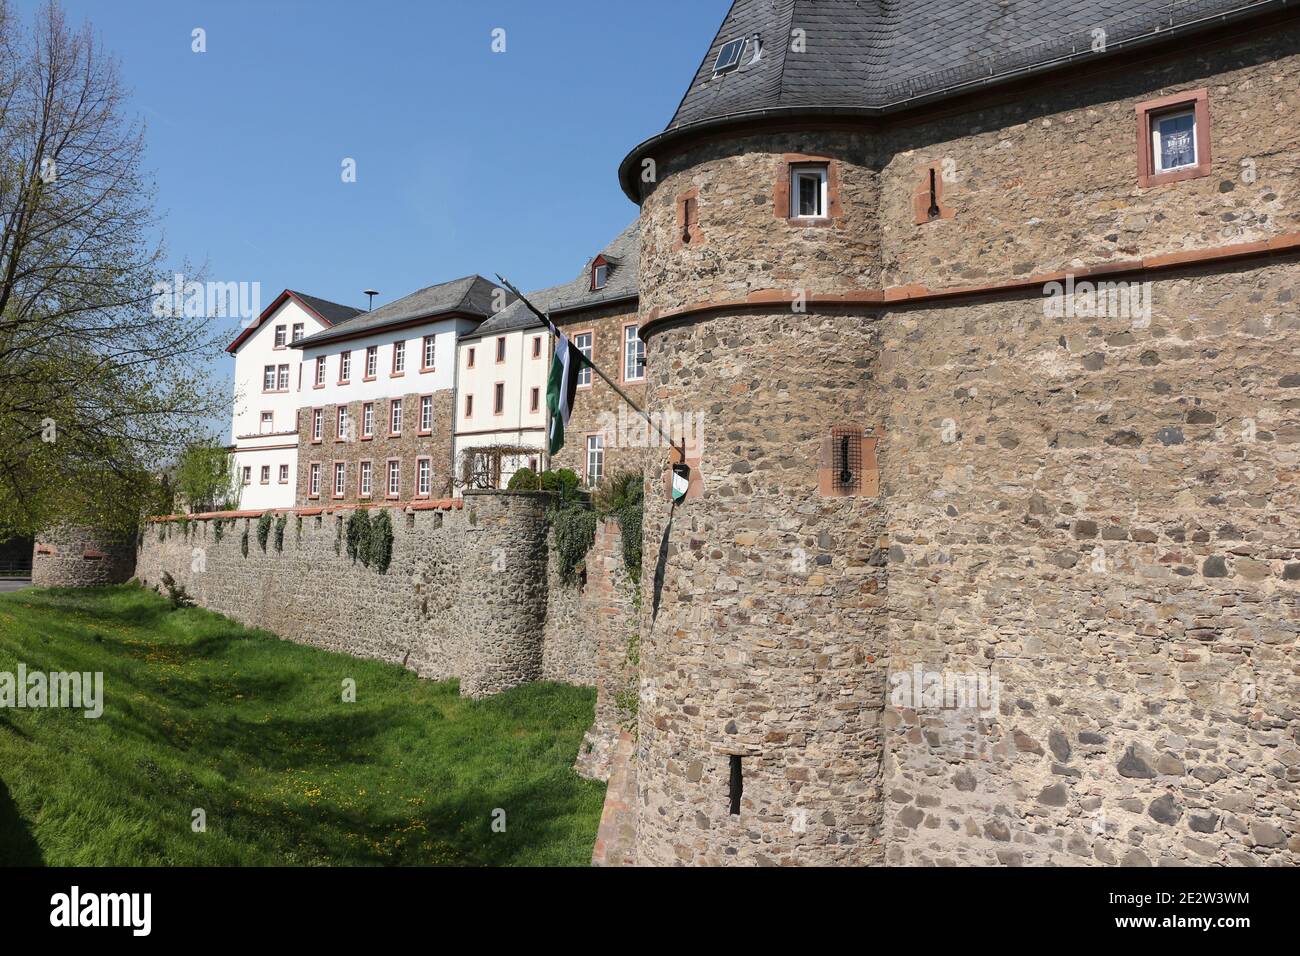 Impressionen aus Bad Homburg in Hessen Stock Photo - Alamy